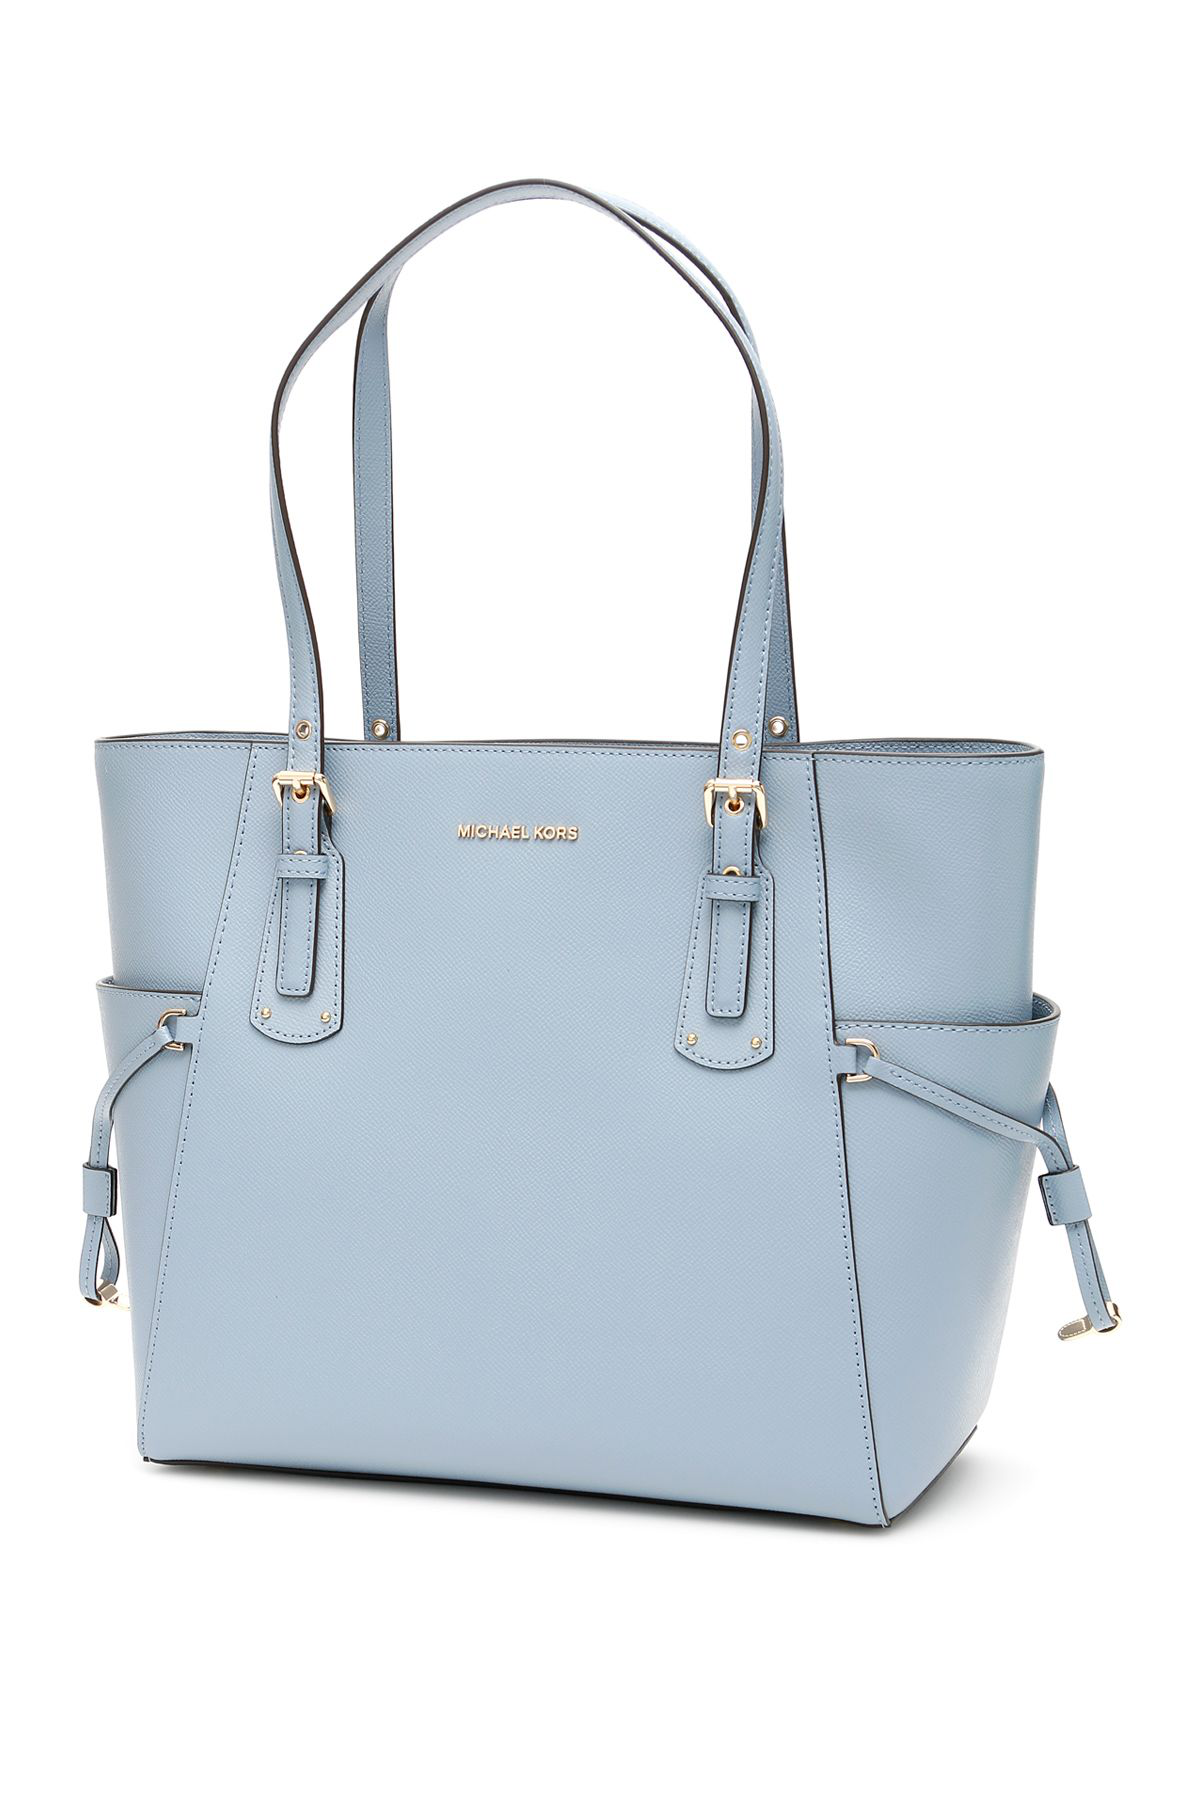 michael kors pale blue handbag